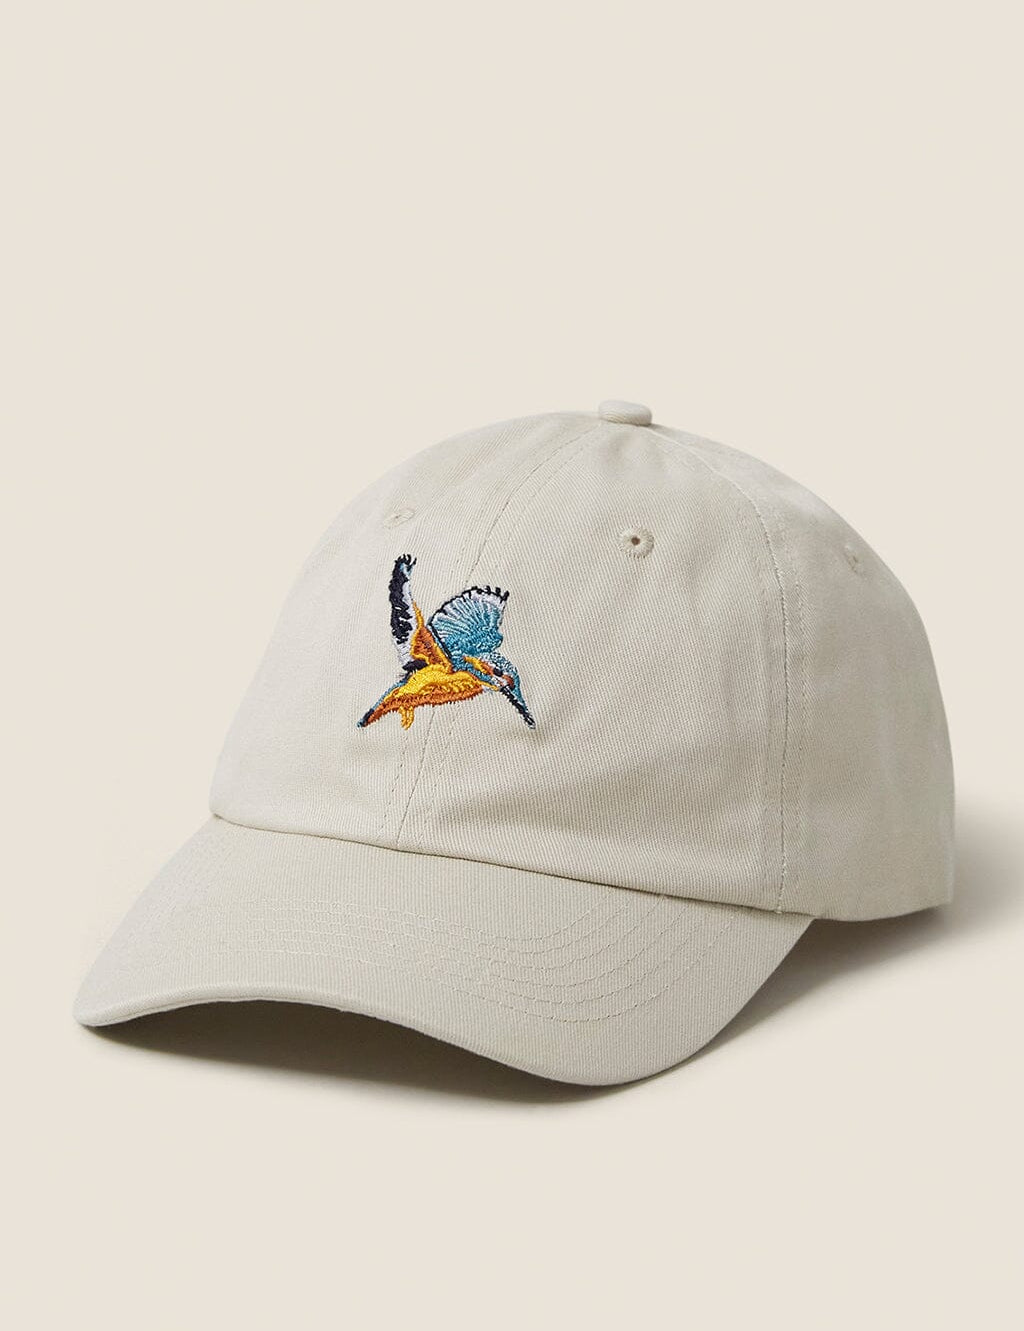 off-white-kingfisher-cotton-cap-976929.jpg